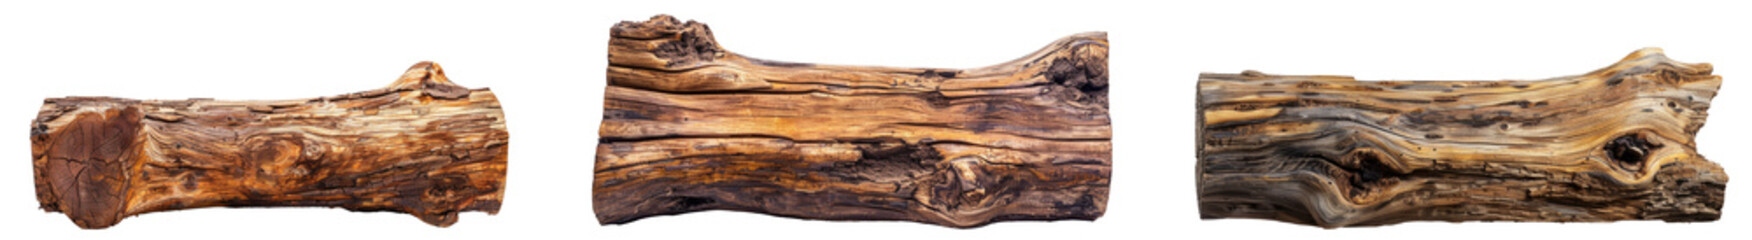 Textured Wood Log set Isolated